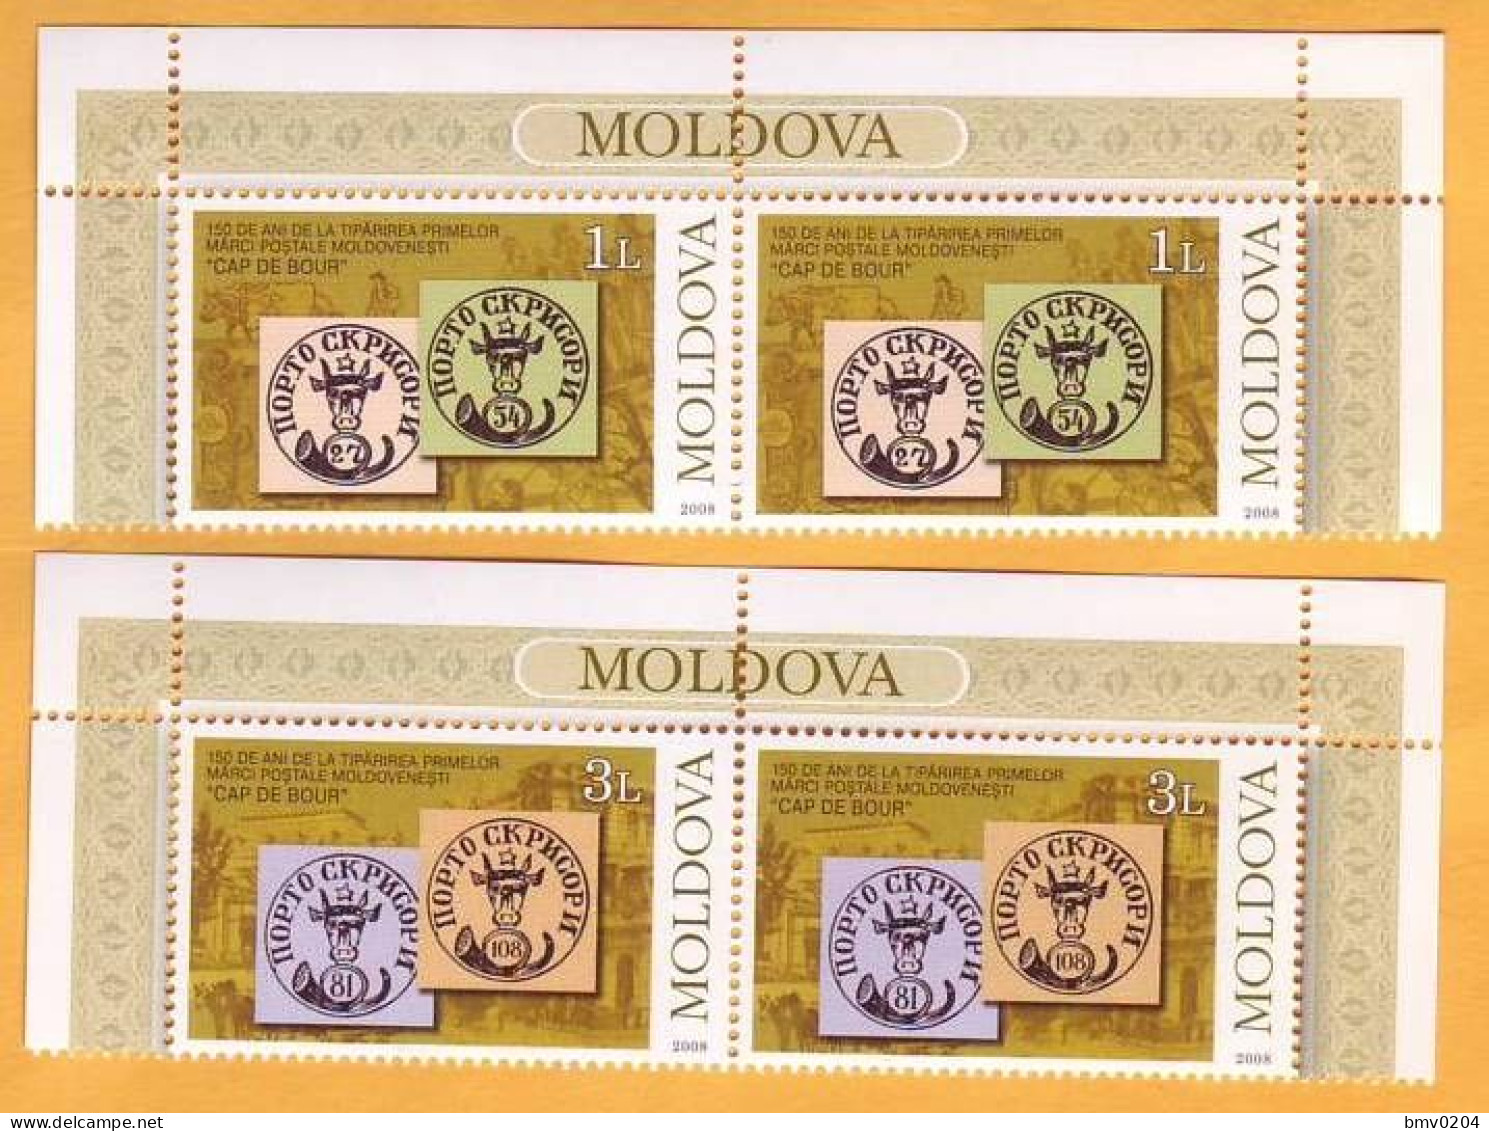 2008 Moldova Moldavie 150. Edition Of The First Postage Stamps Of The Moldavian Principality "Cap De Bour" 2x2v Mint. - Moldawien (Moldau)